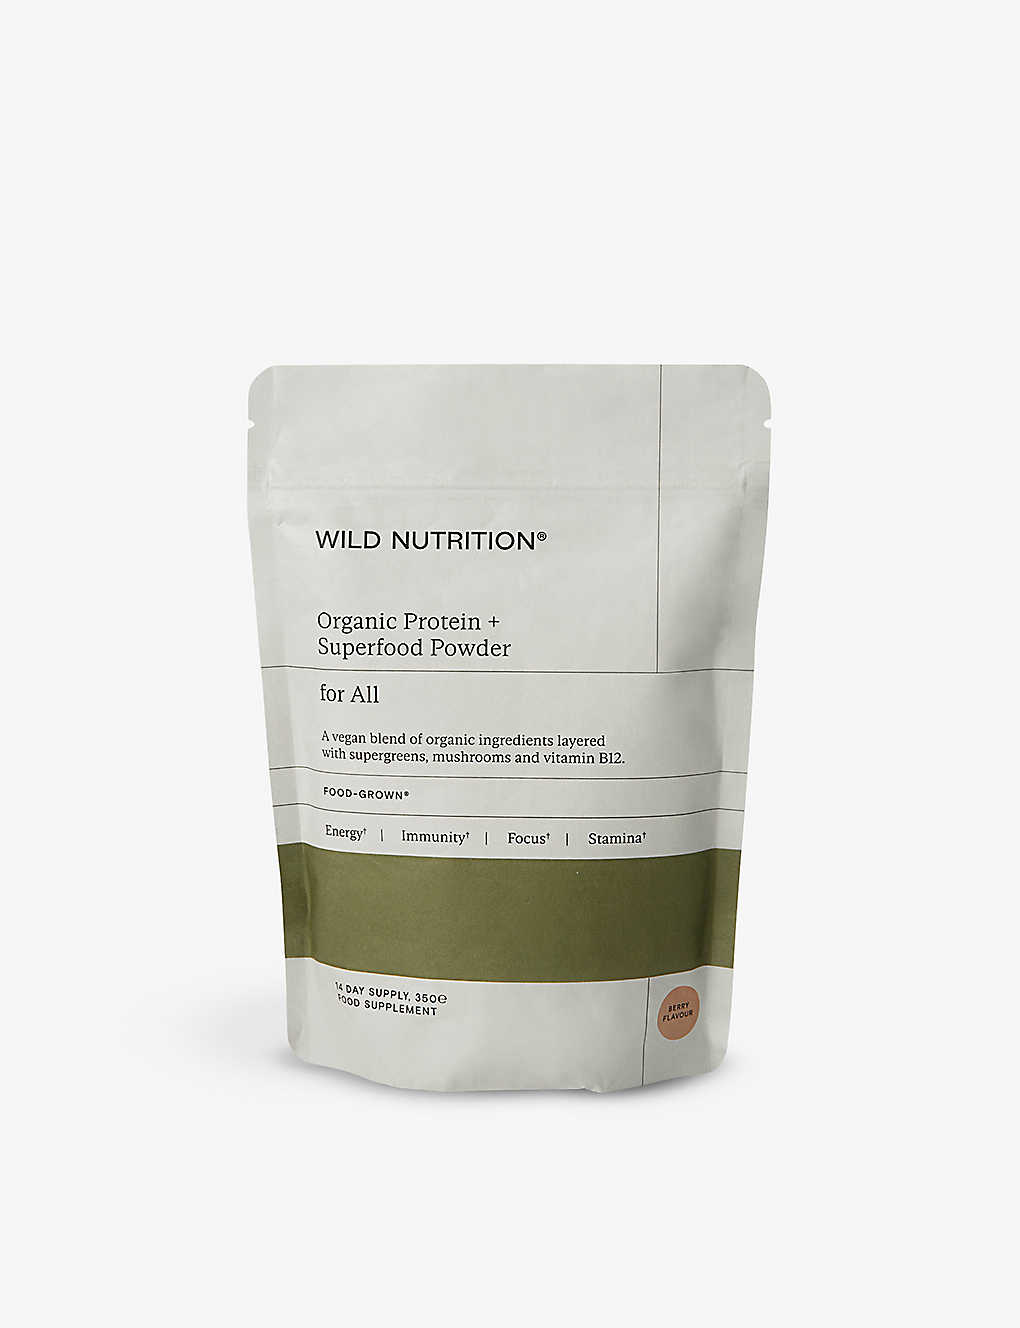 Wild Nutrition Organic Protein + Superfood Powder Supplements 14-day Supply In White